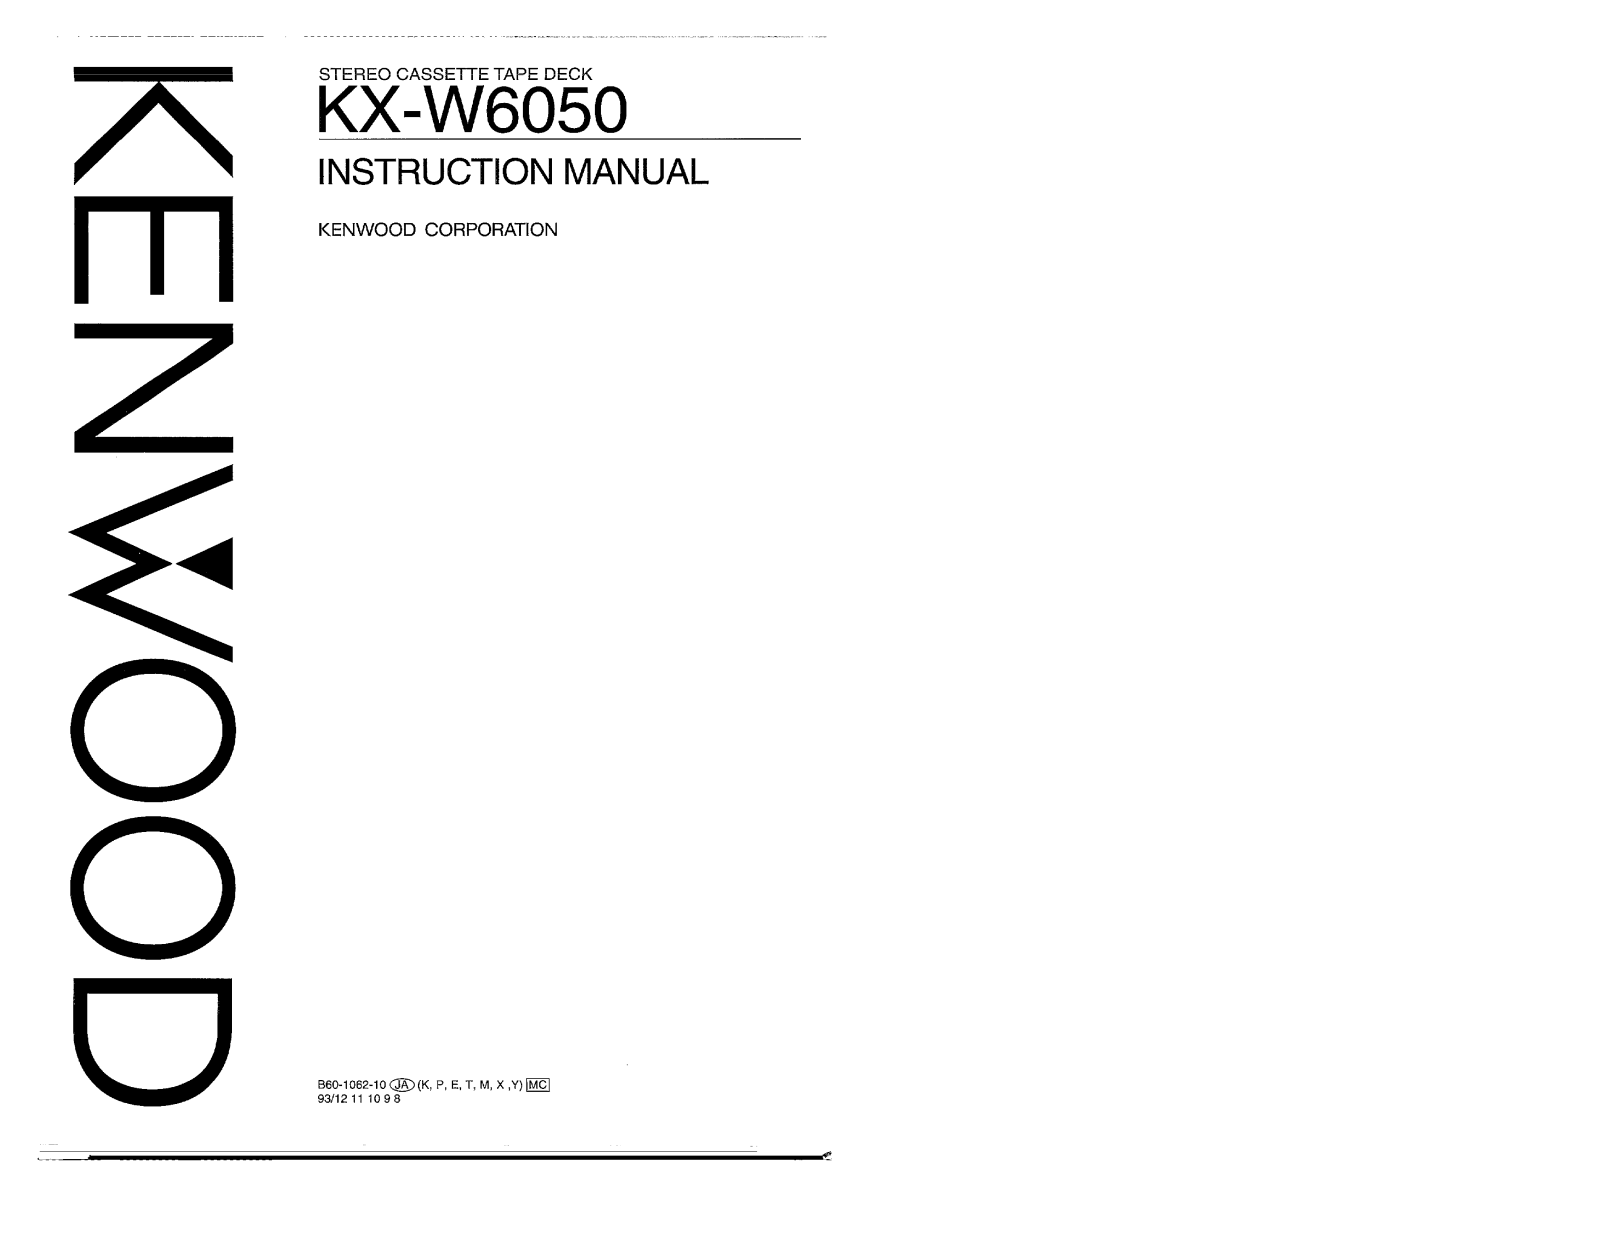 Kenwood KX-W6050 Owner's Manual